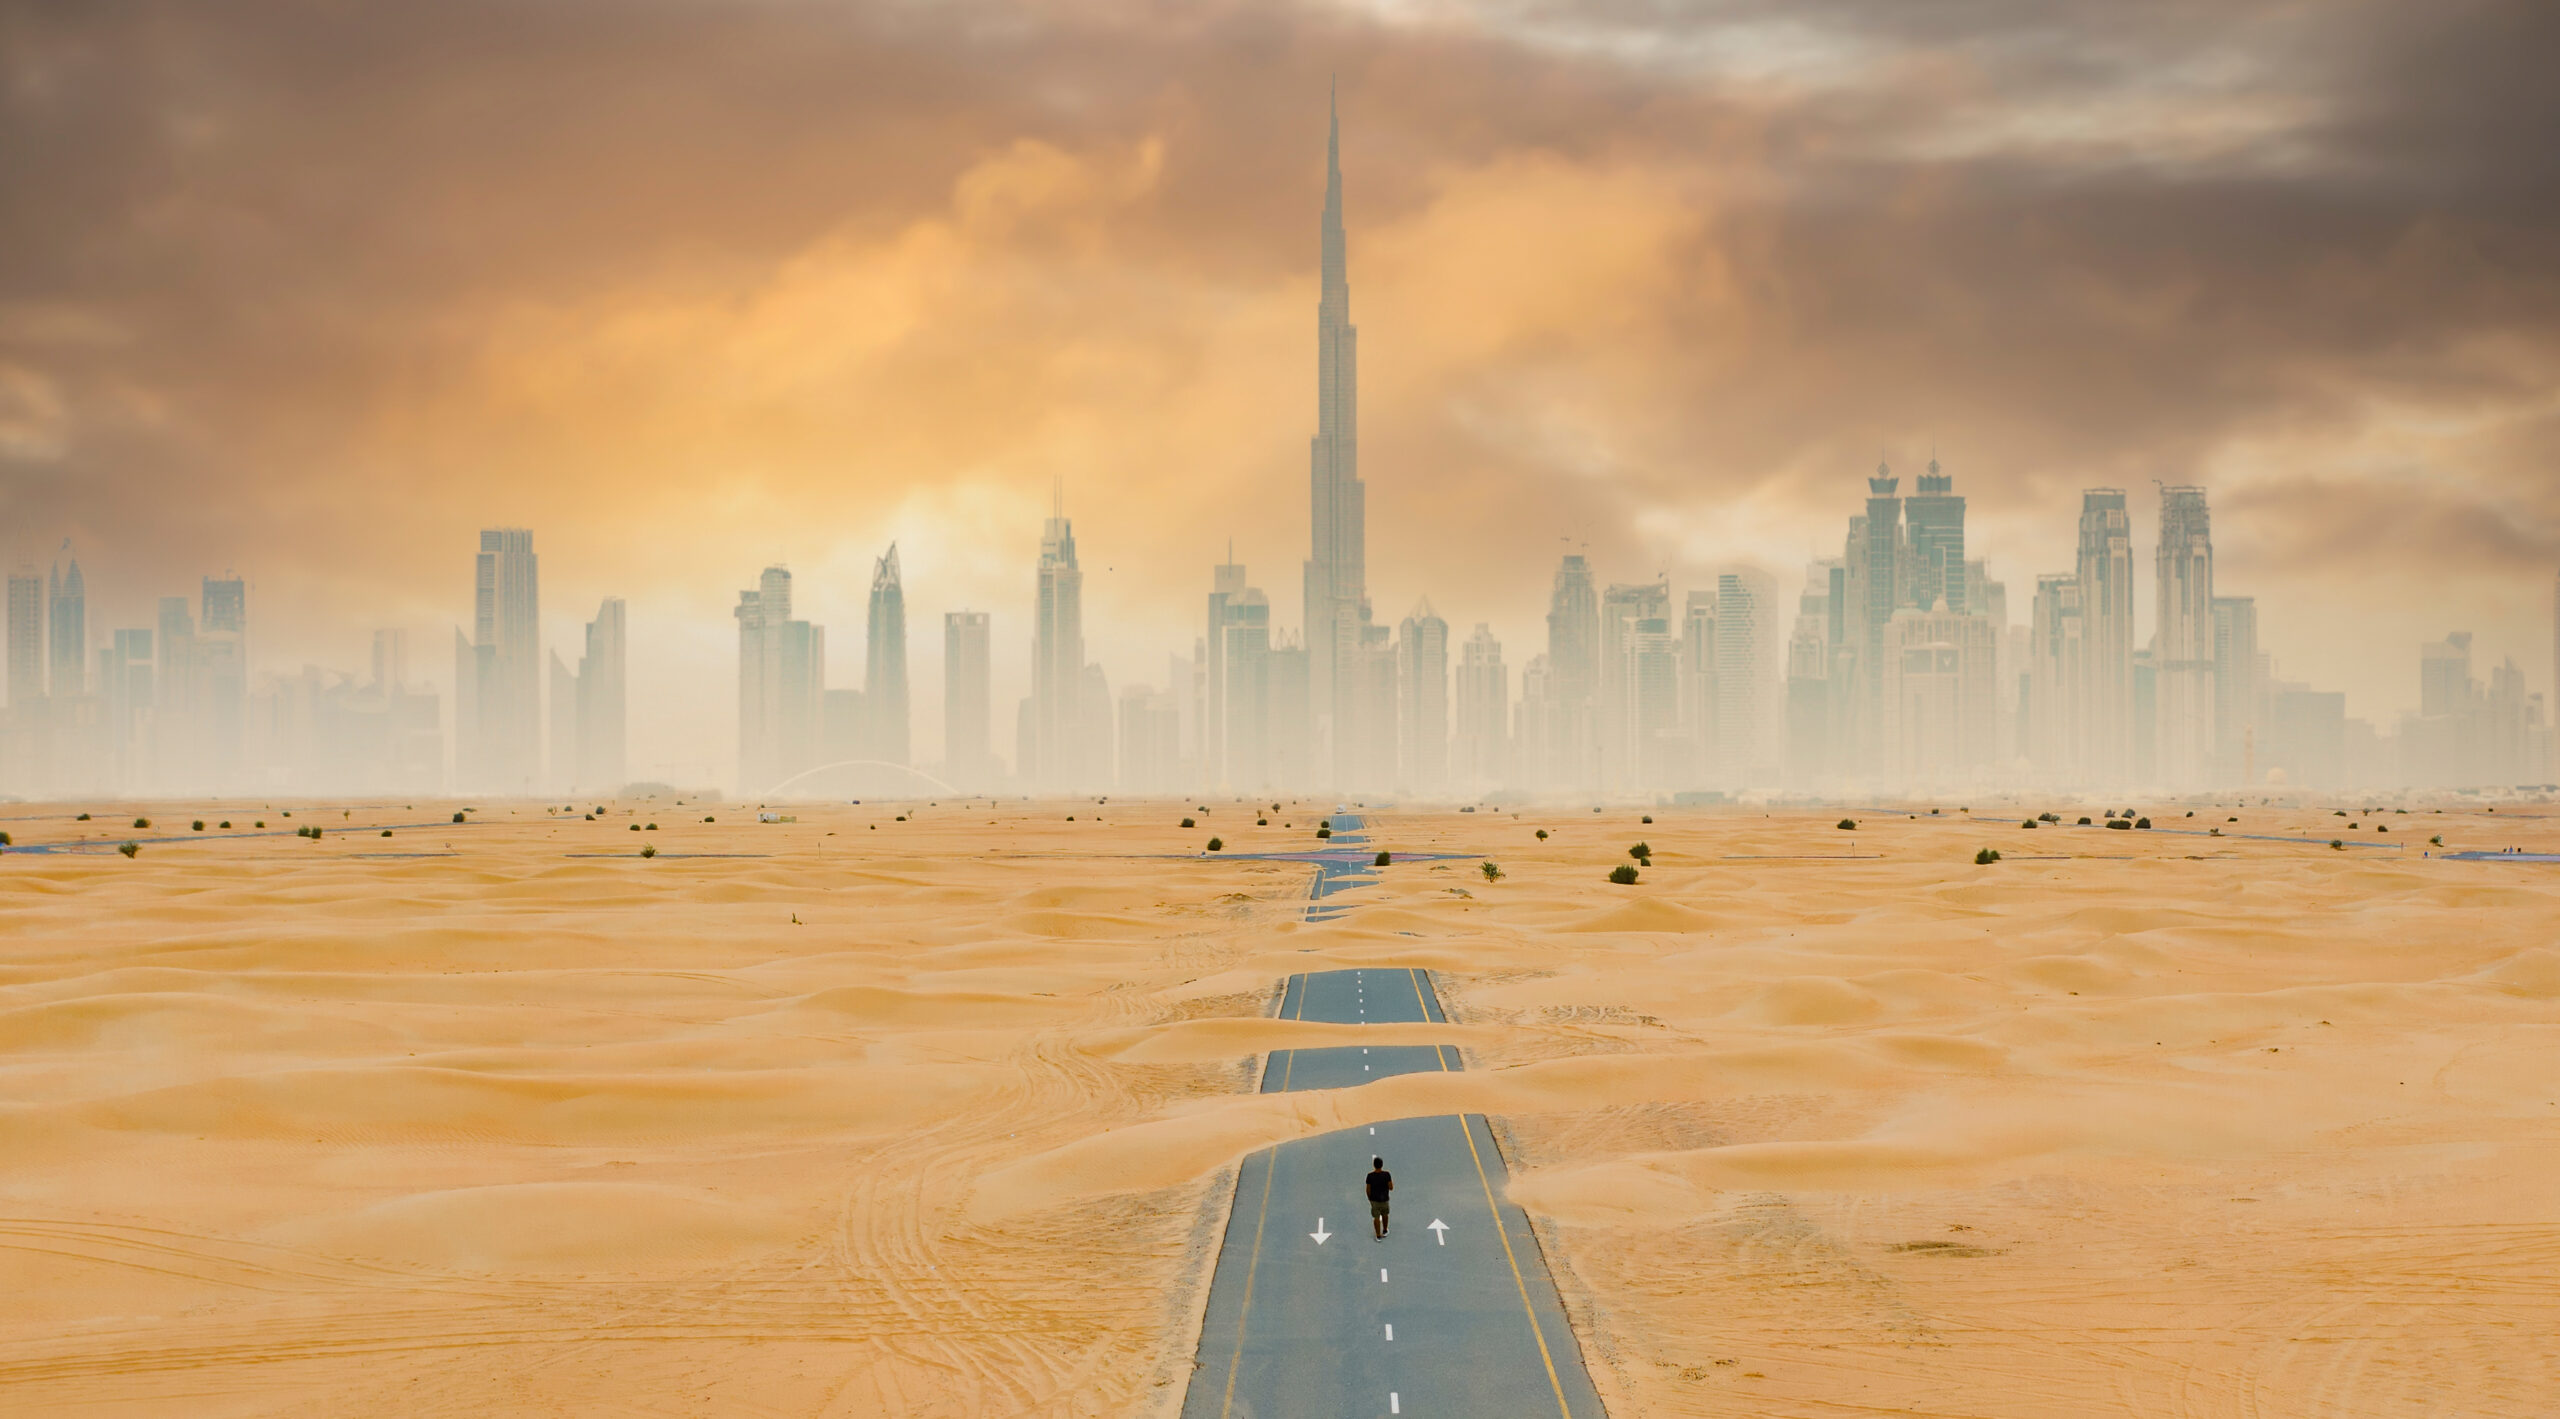 Dubai weather and climate - Sandstorm in Dubai